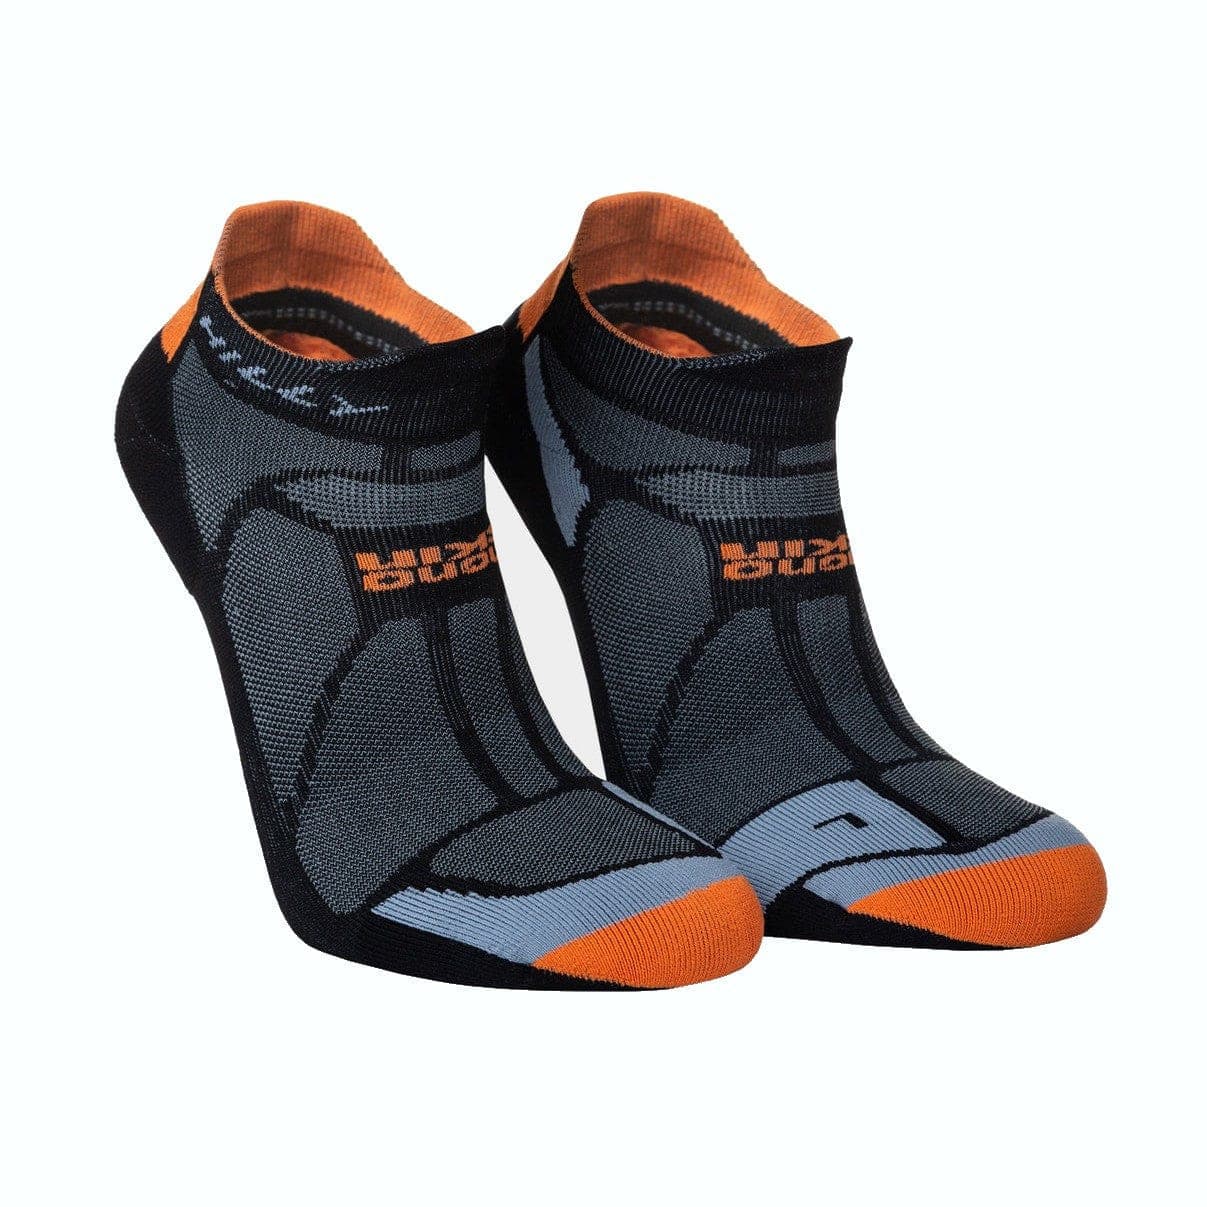 Hilly Marathon Fresh Socklet Min - Black/Orange